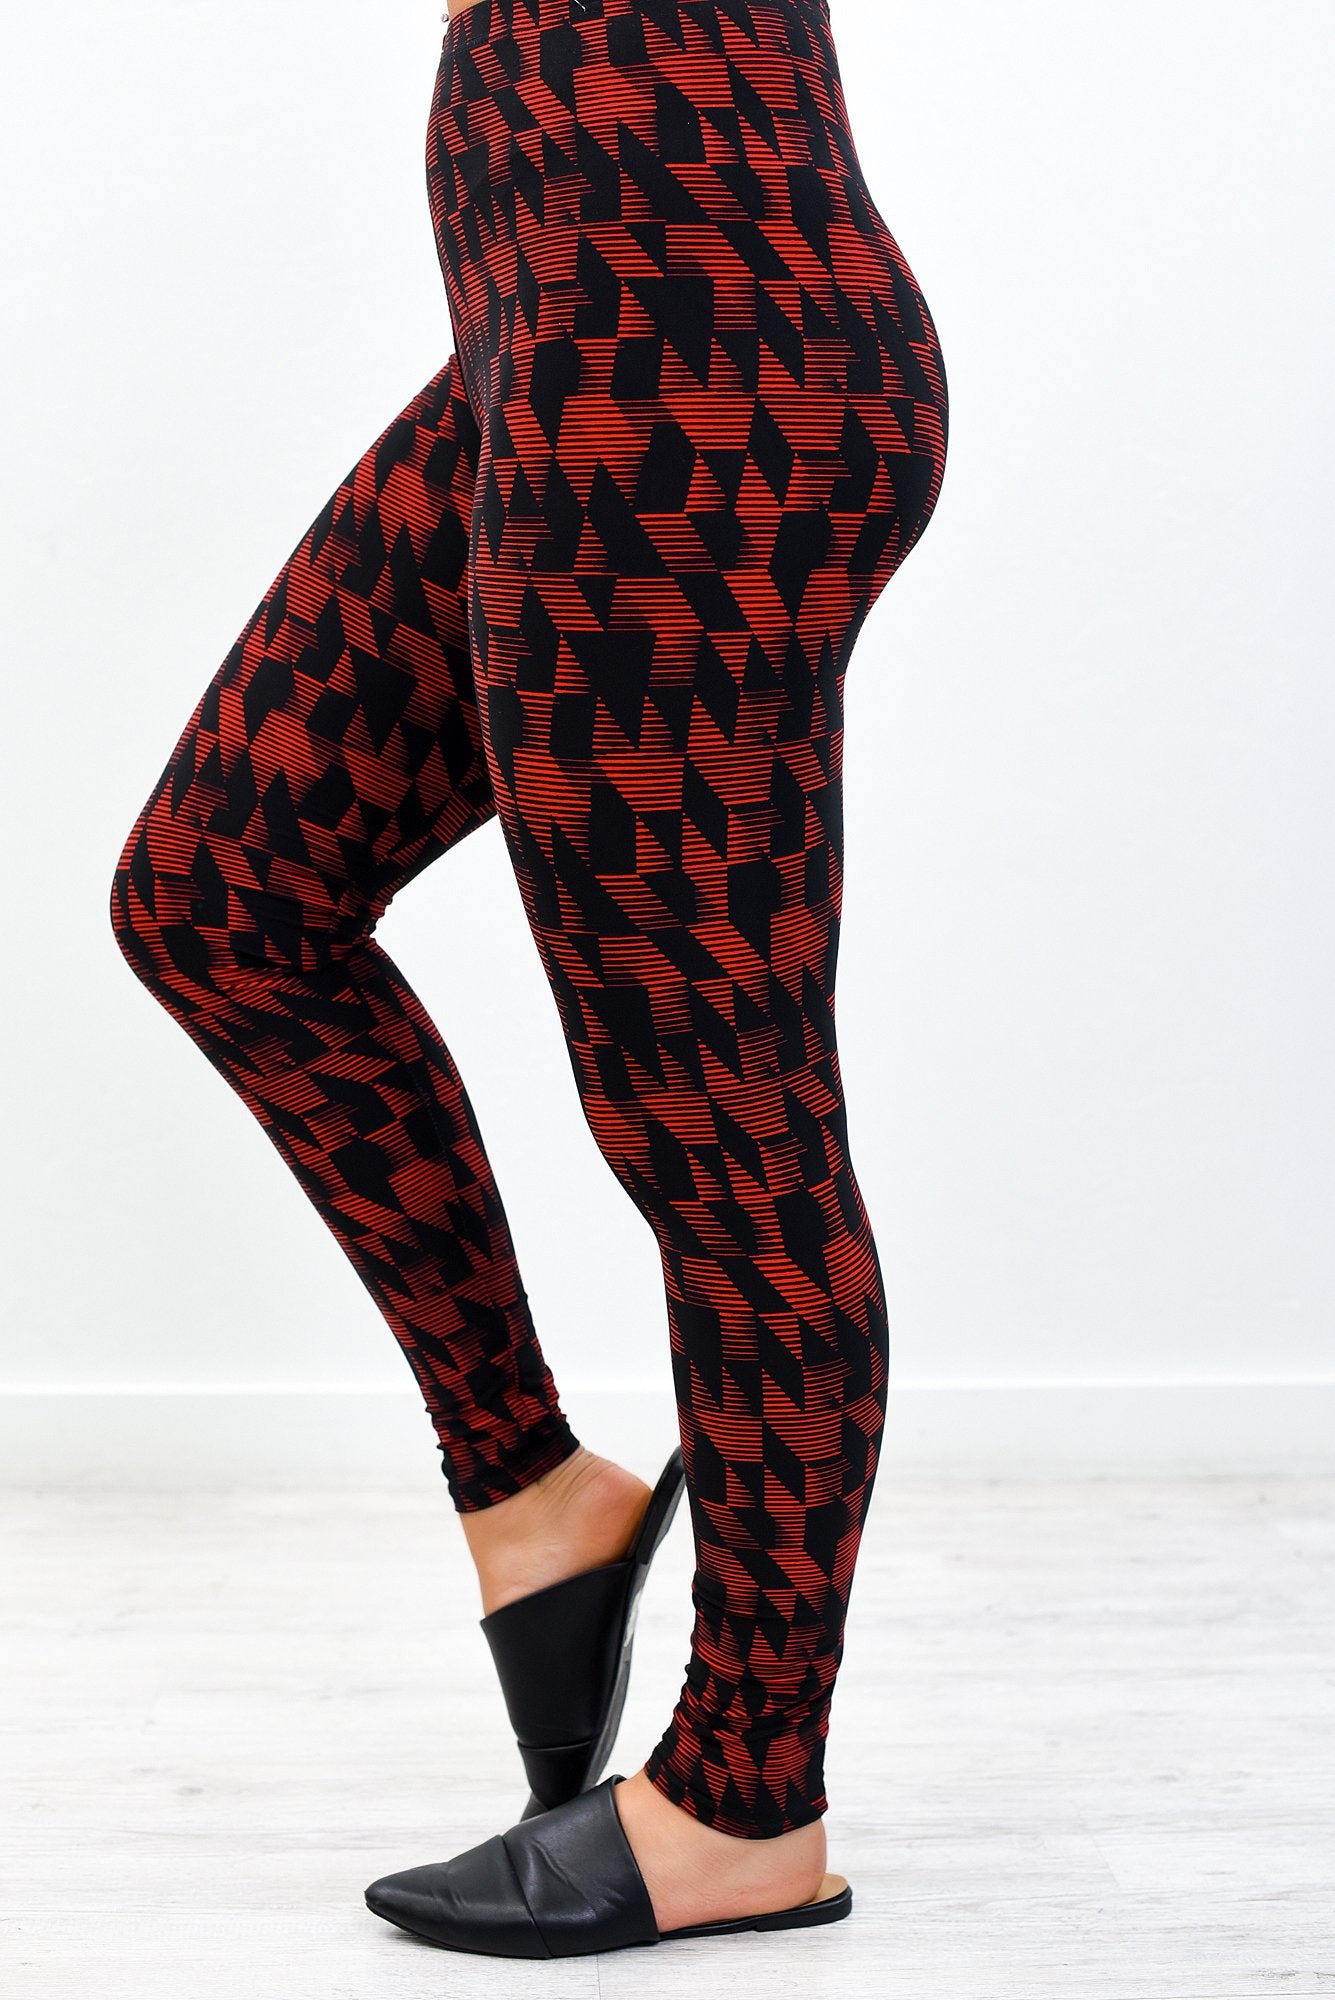 Black/Red Geometric Printed Leggings (Sizes 4-12) - LEG2714BK